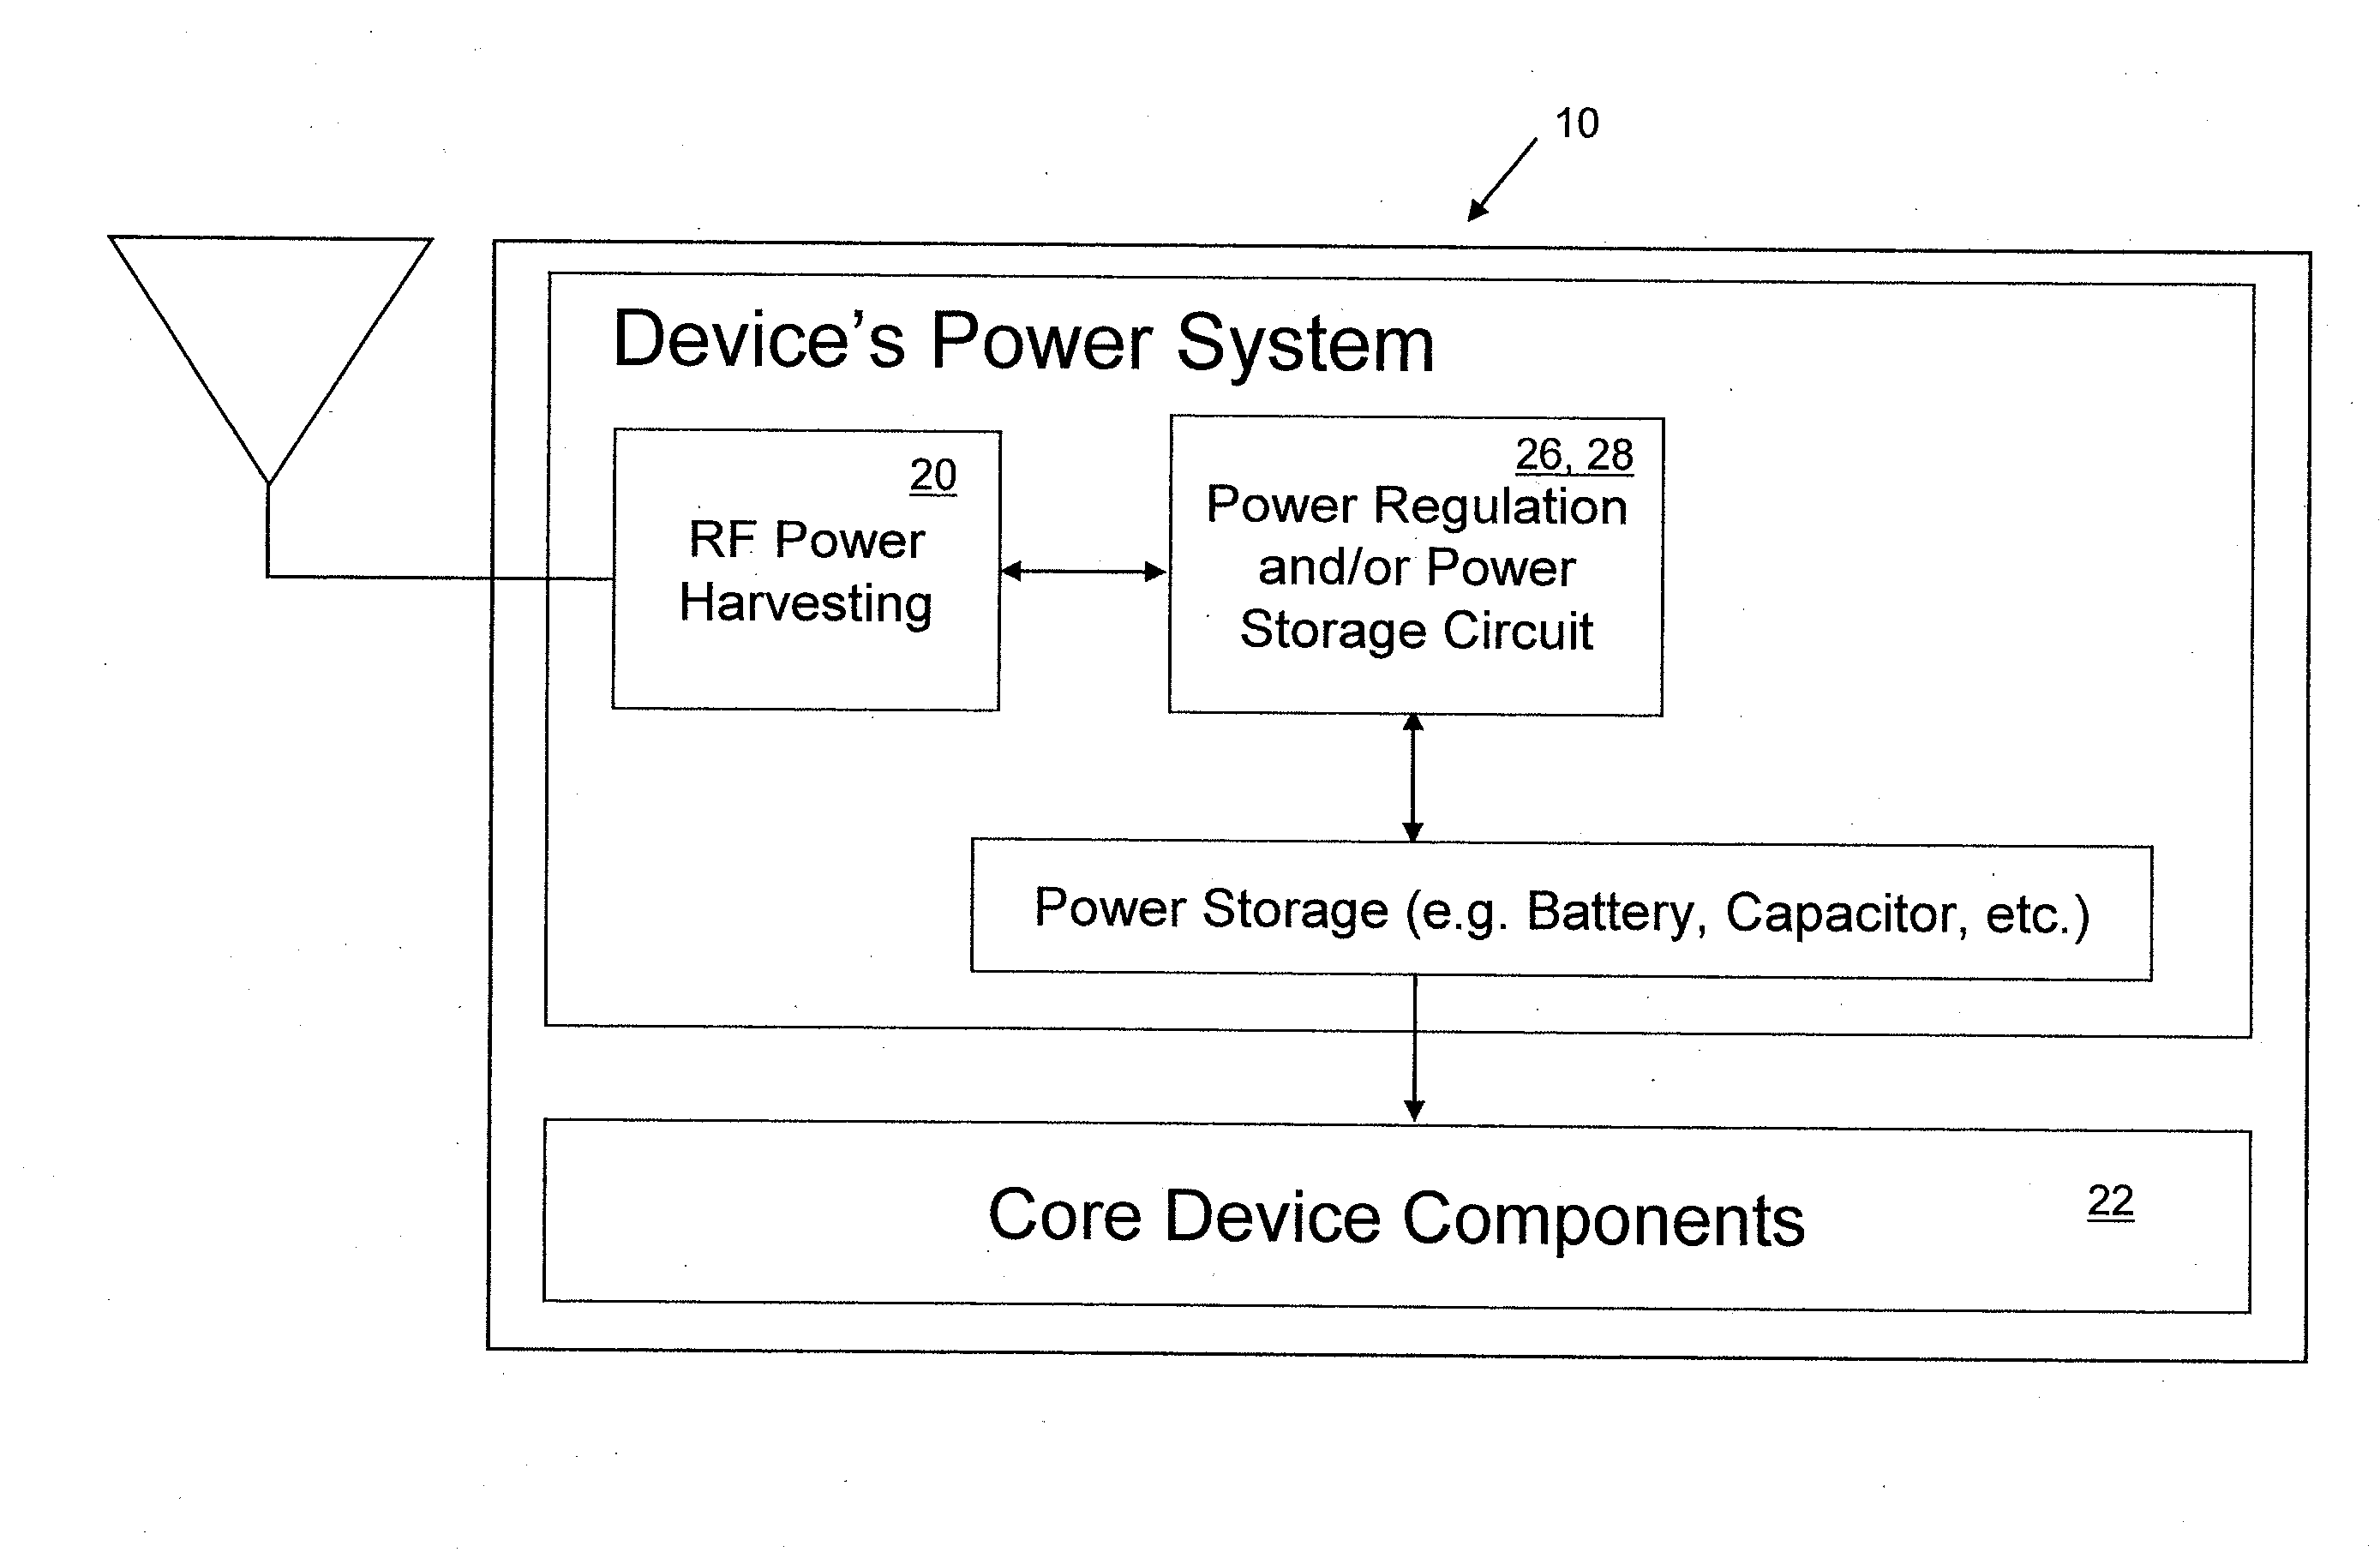 Powering devices using RF energy harvesting